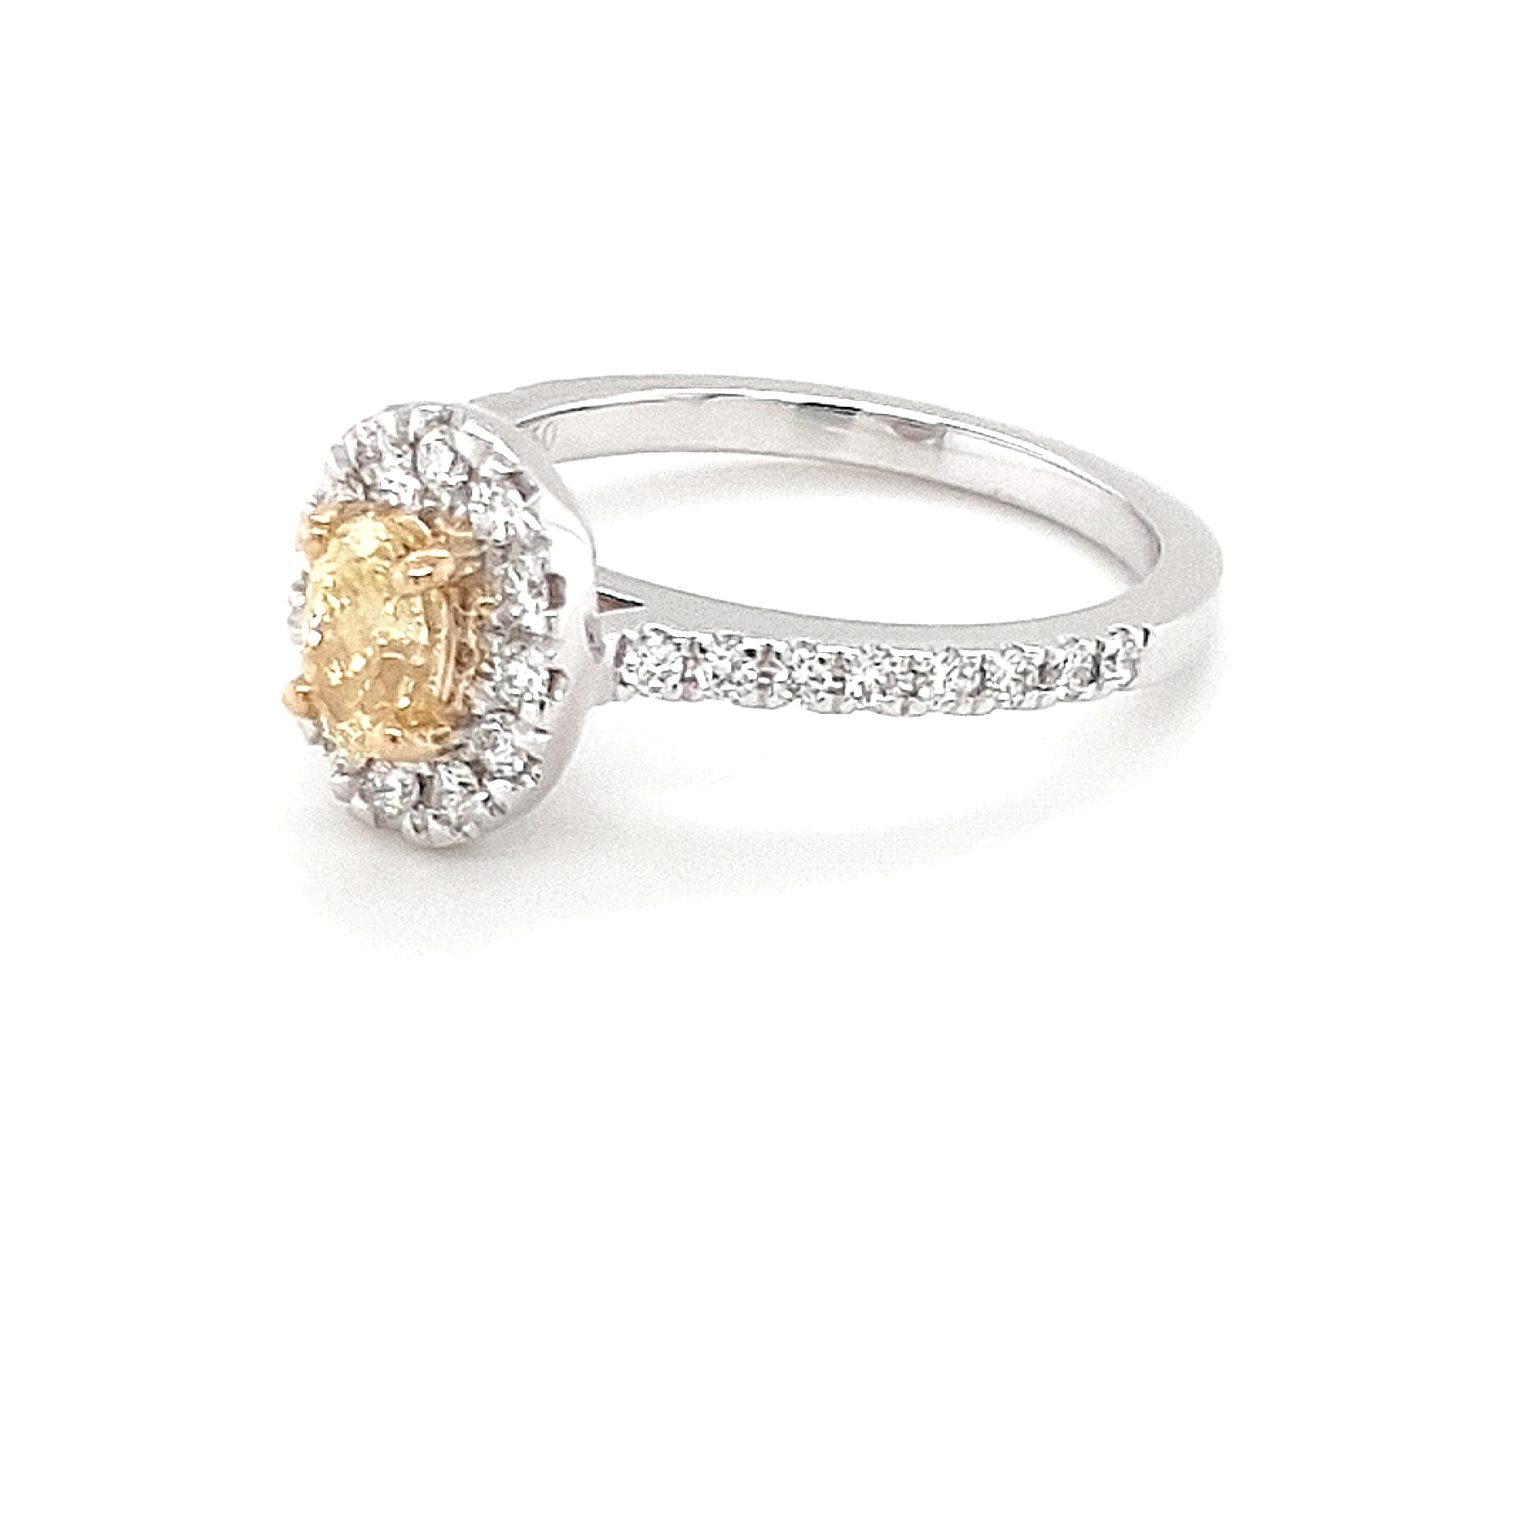 Leon Bakers 18k White Gold Yellow Diamond Ring_1